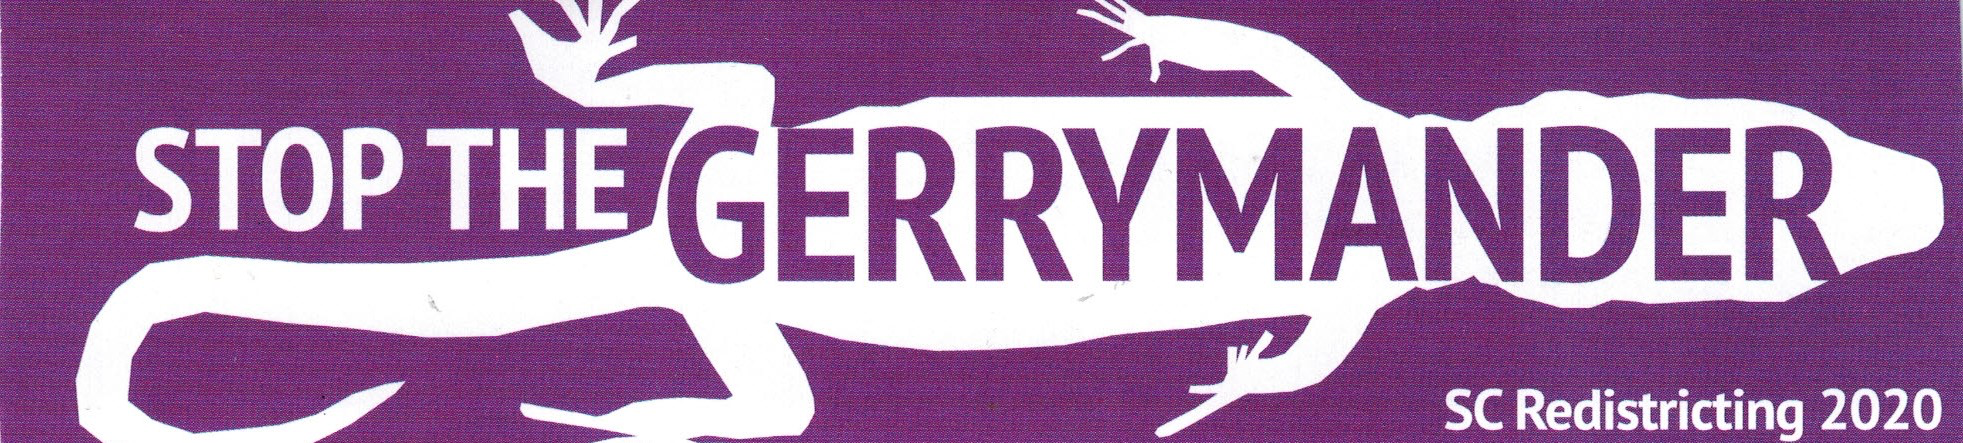 Stop the Gerrymander bumper sticker